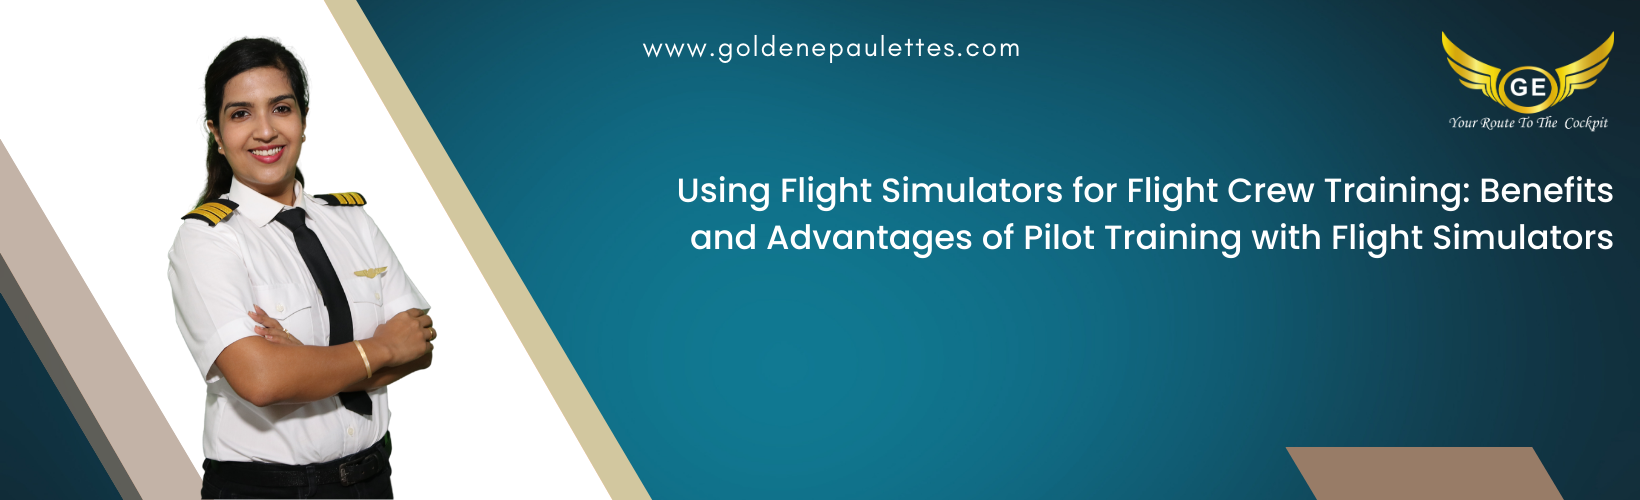 Using Flight Simulators for Flight Crew Training